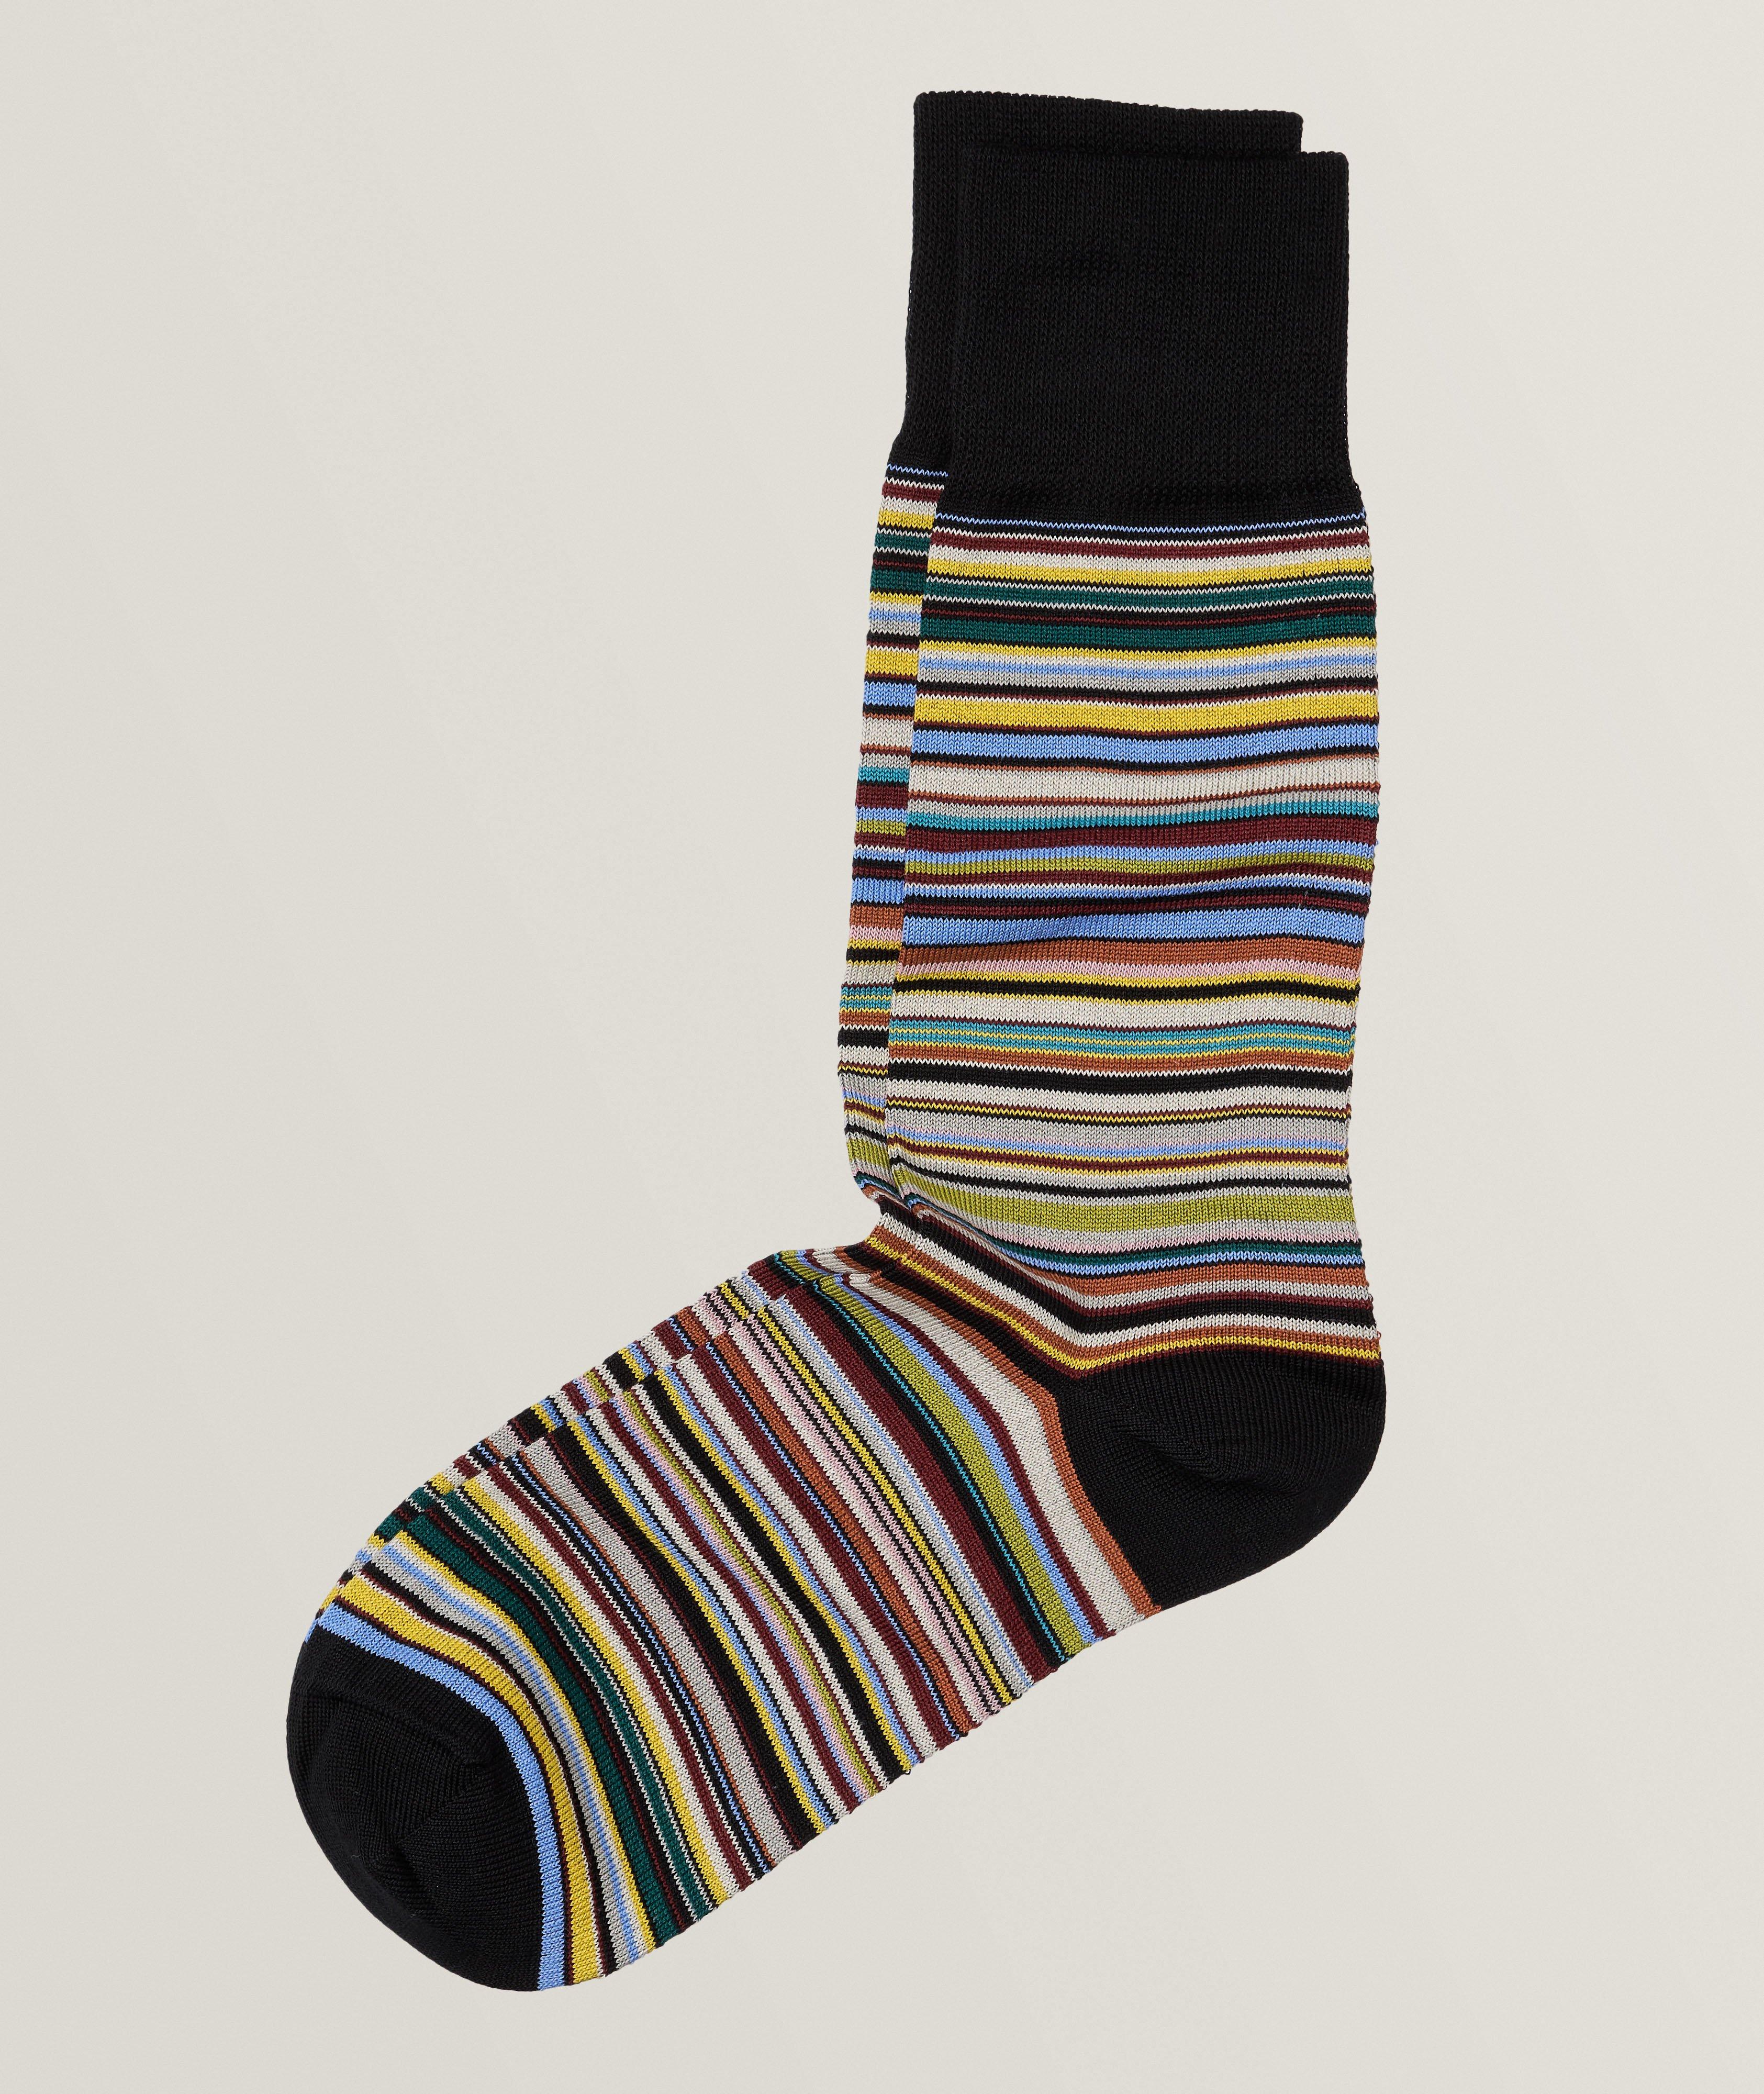 Signature Stripes Cotton-Blend Knit Socks image 0